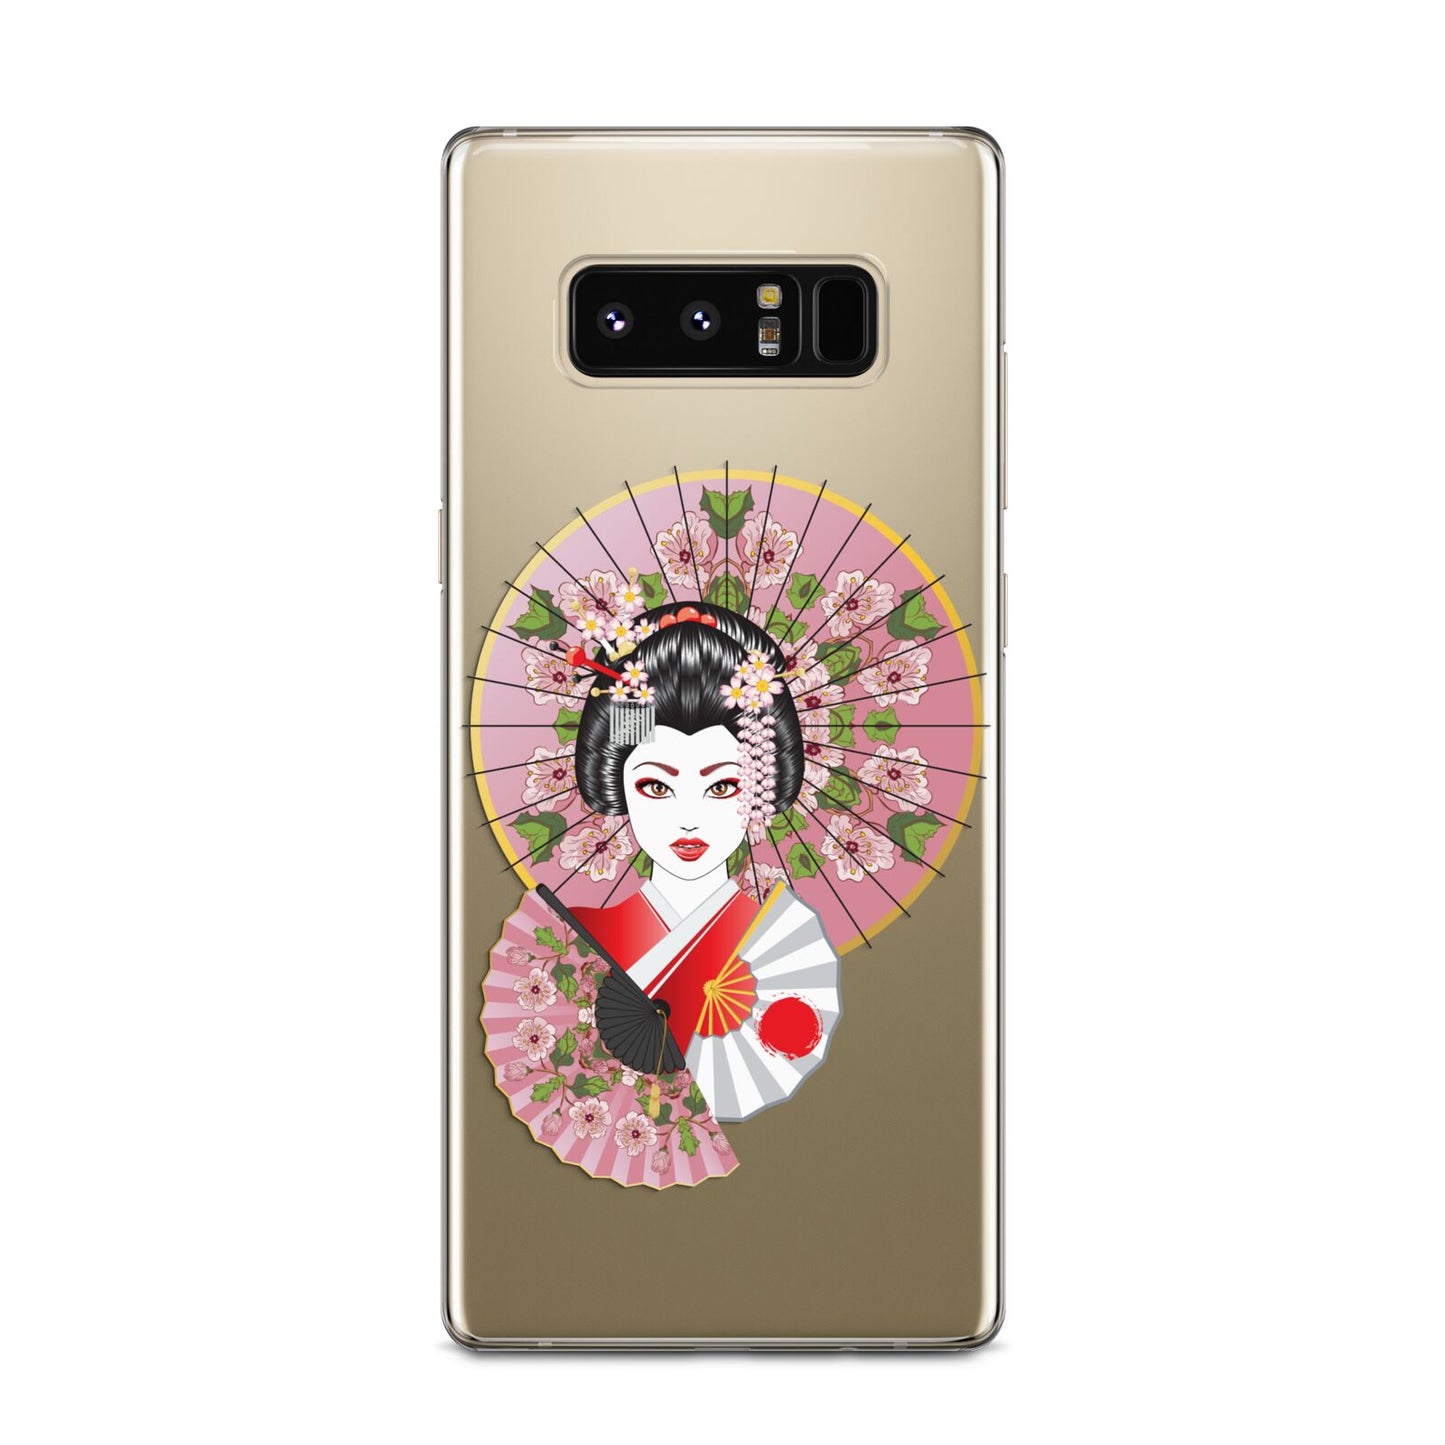 Geisha Girl Samsung Galaxy Note 8 Case